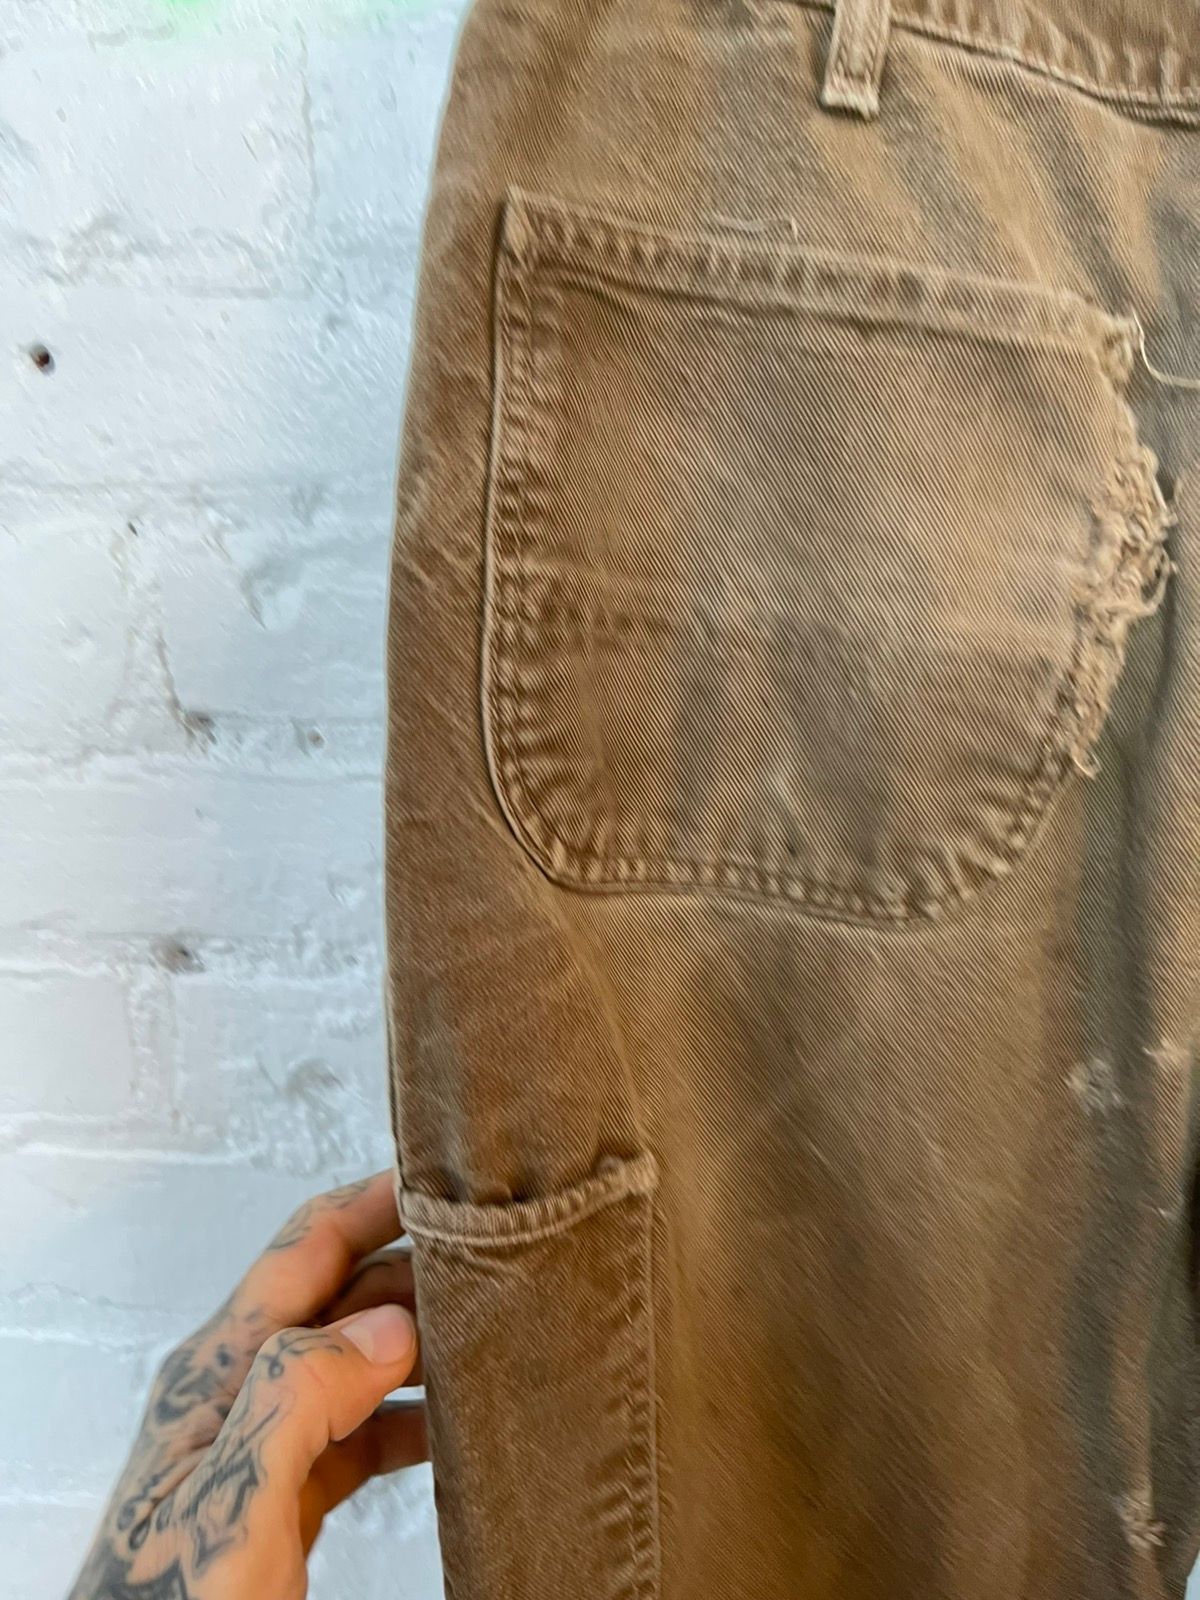 Vintage THRASHED Carhartt Pants Jeans Deep Tan US 32 -34